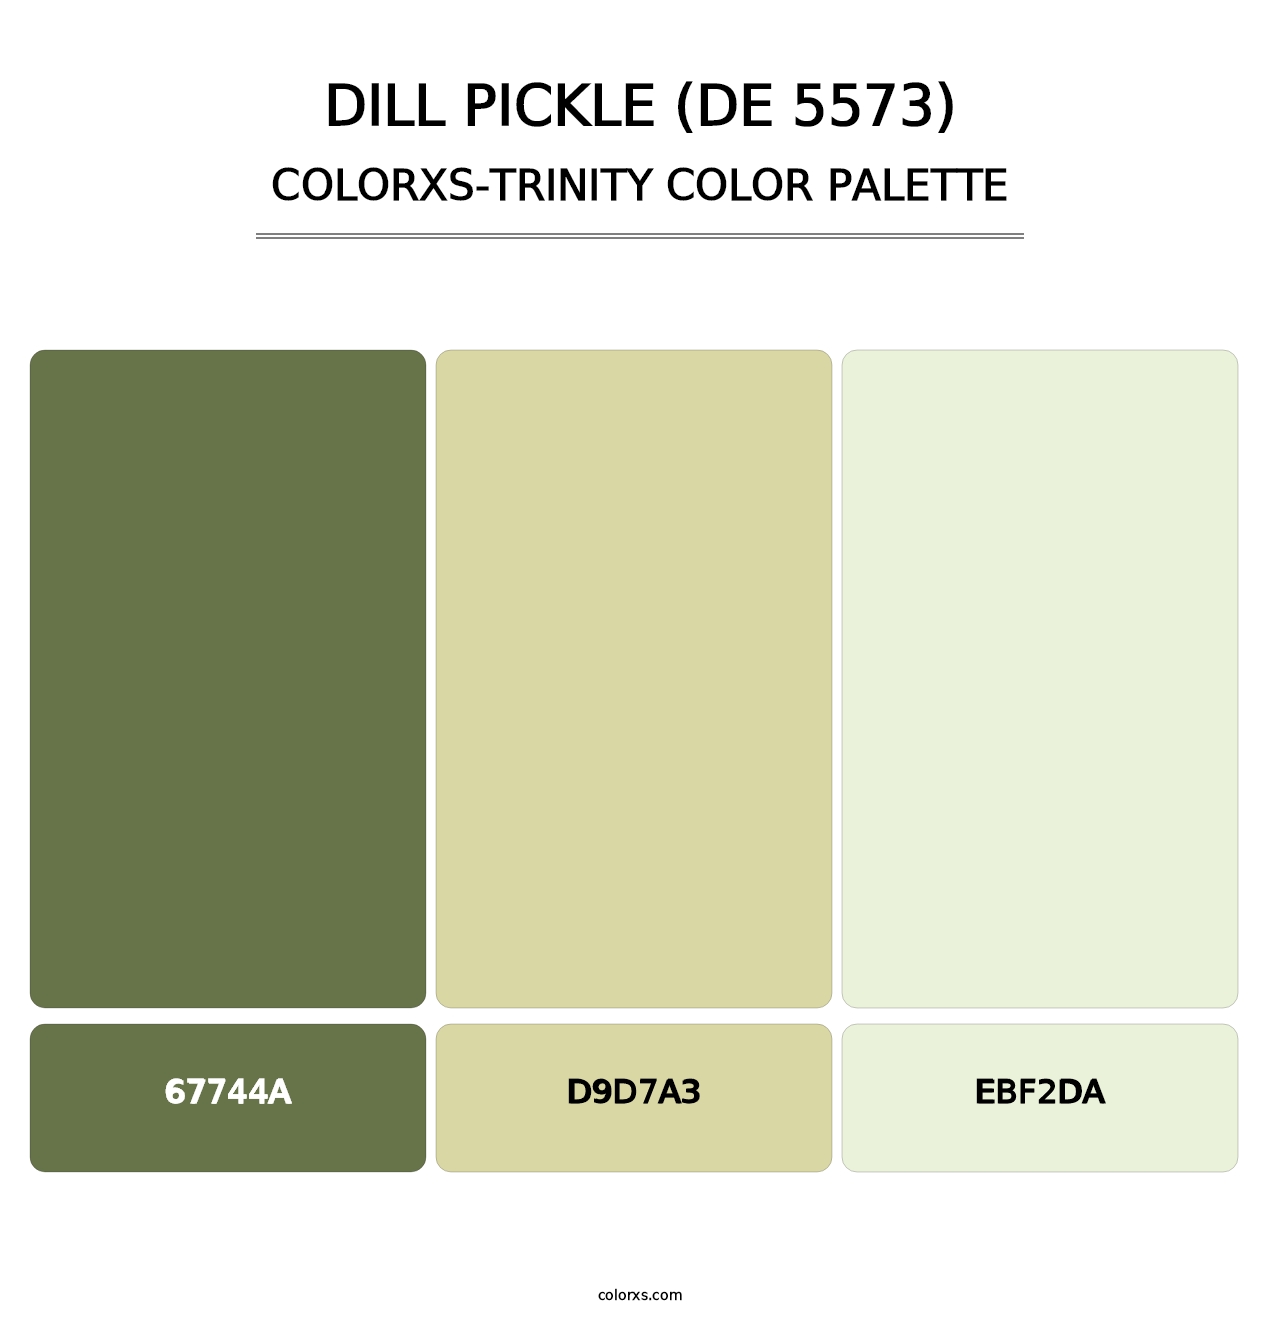 Dill Pickle (DE 5573) - Colorxs Trinity Palette